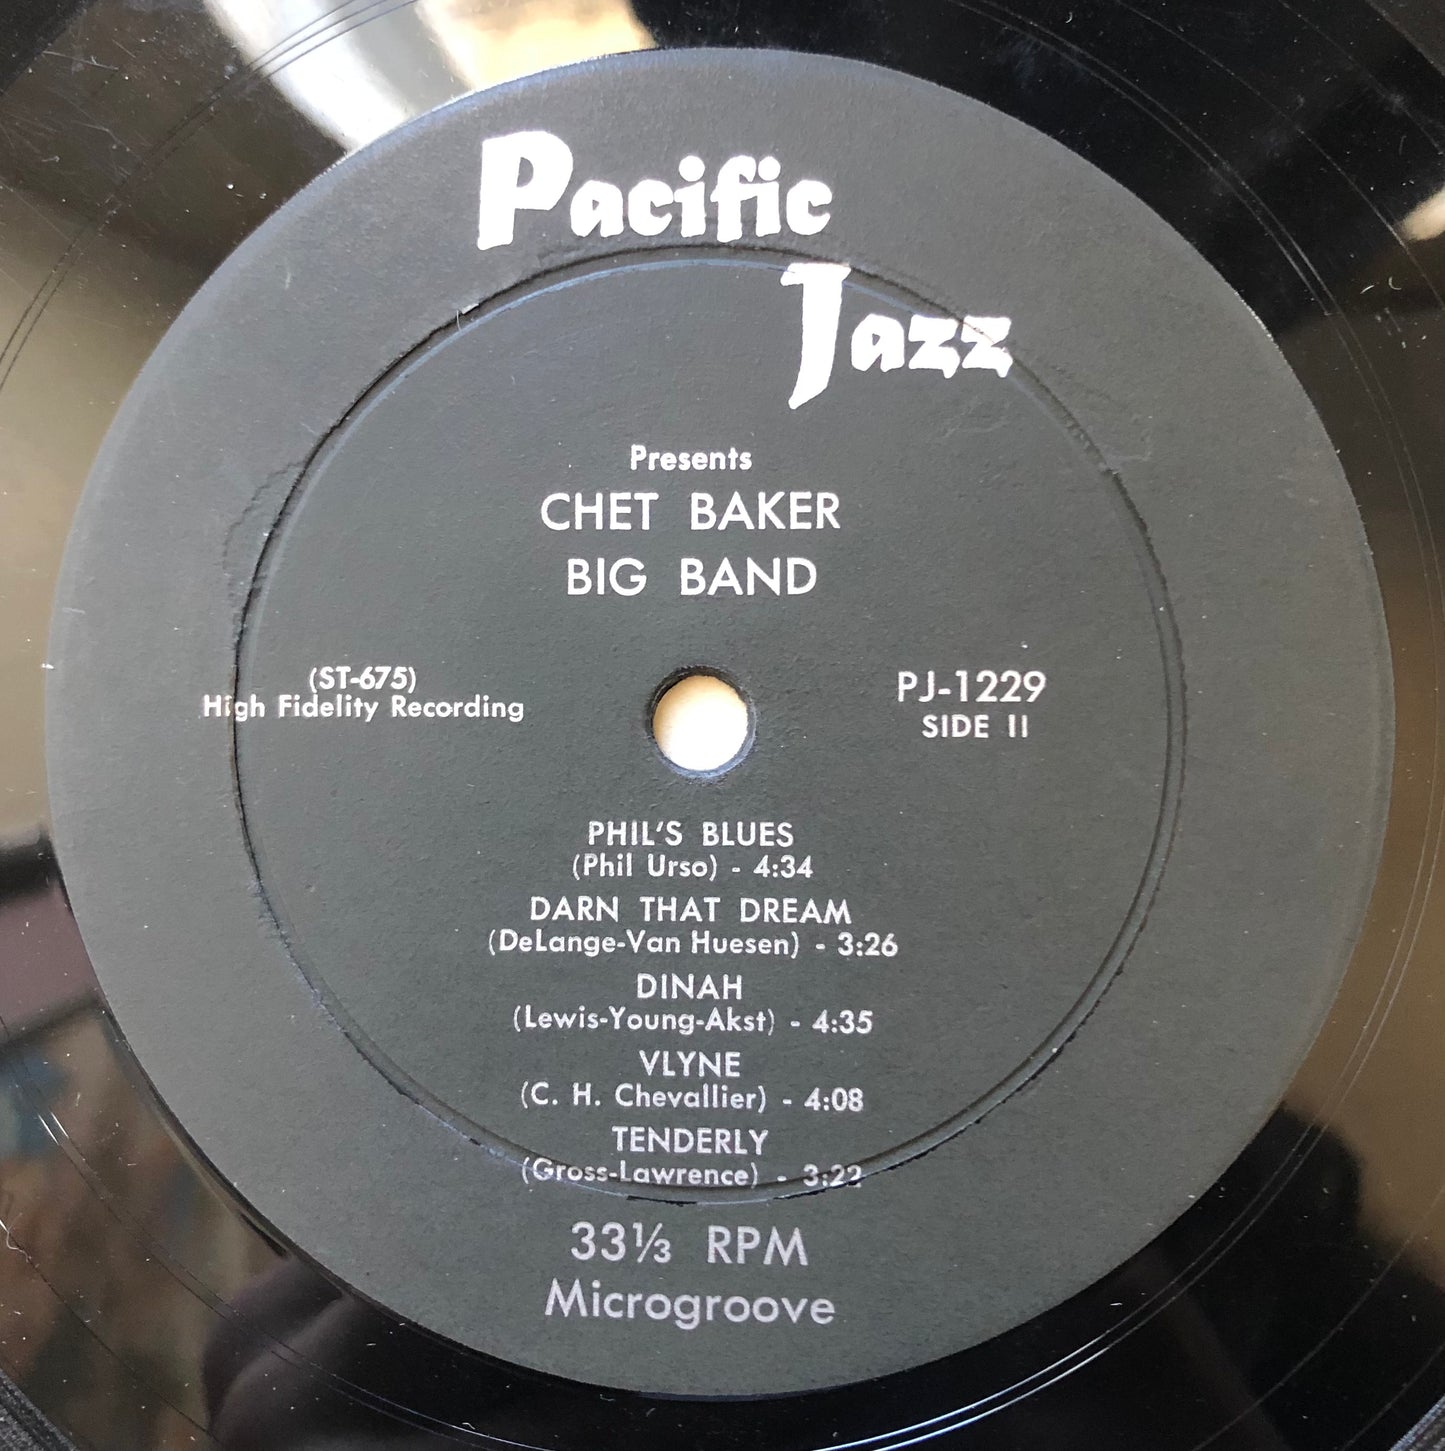 Chet Baker - Big Band 1957 Pacific Jazz